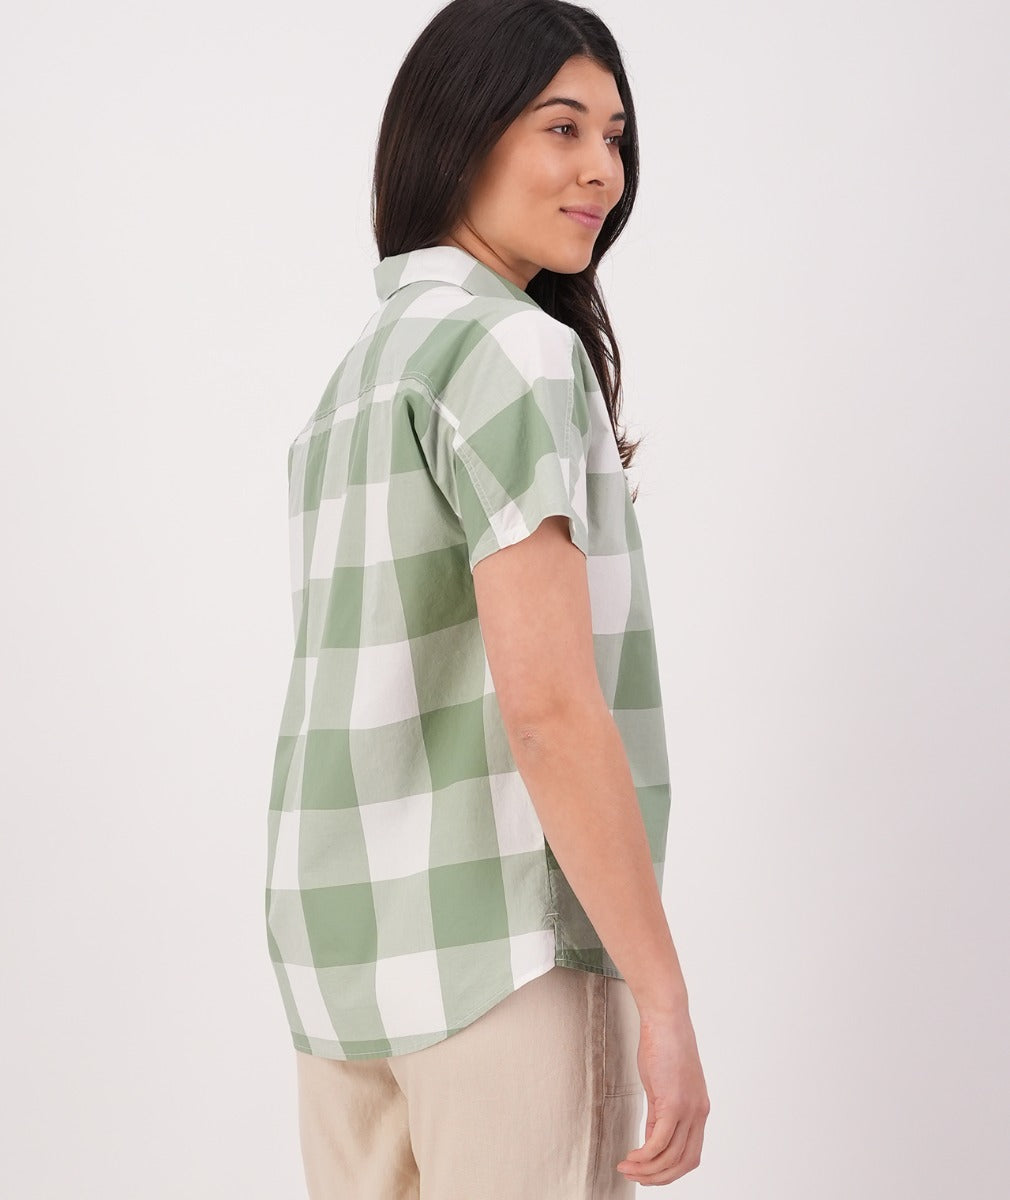 Manaia Short Sleeve Shirt | Fern Check - Swanndri - Beechworth Emporium